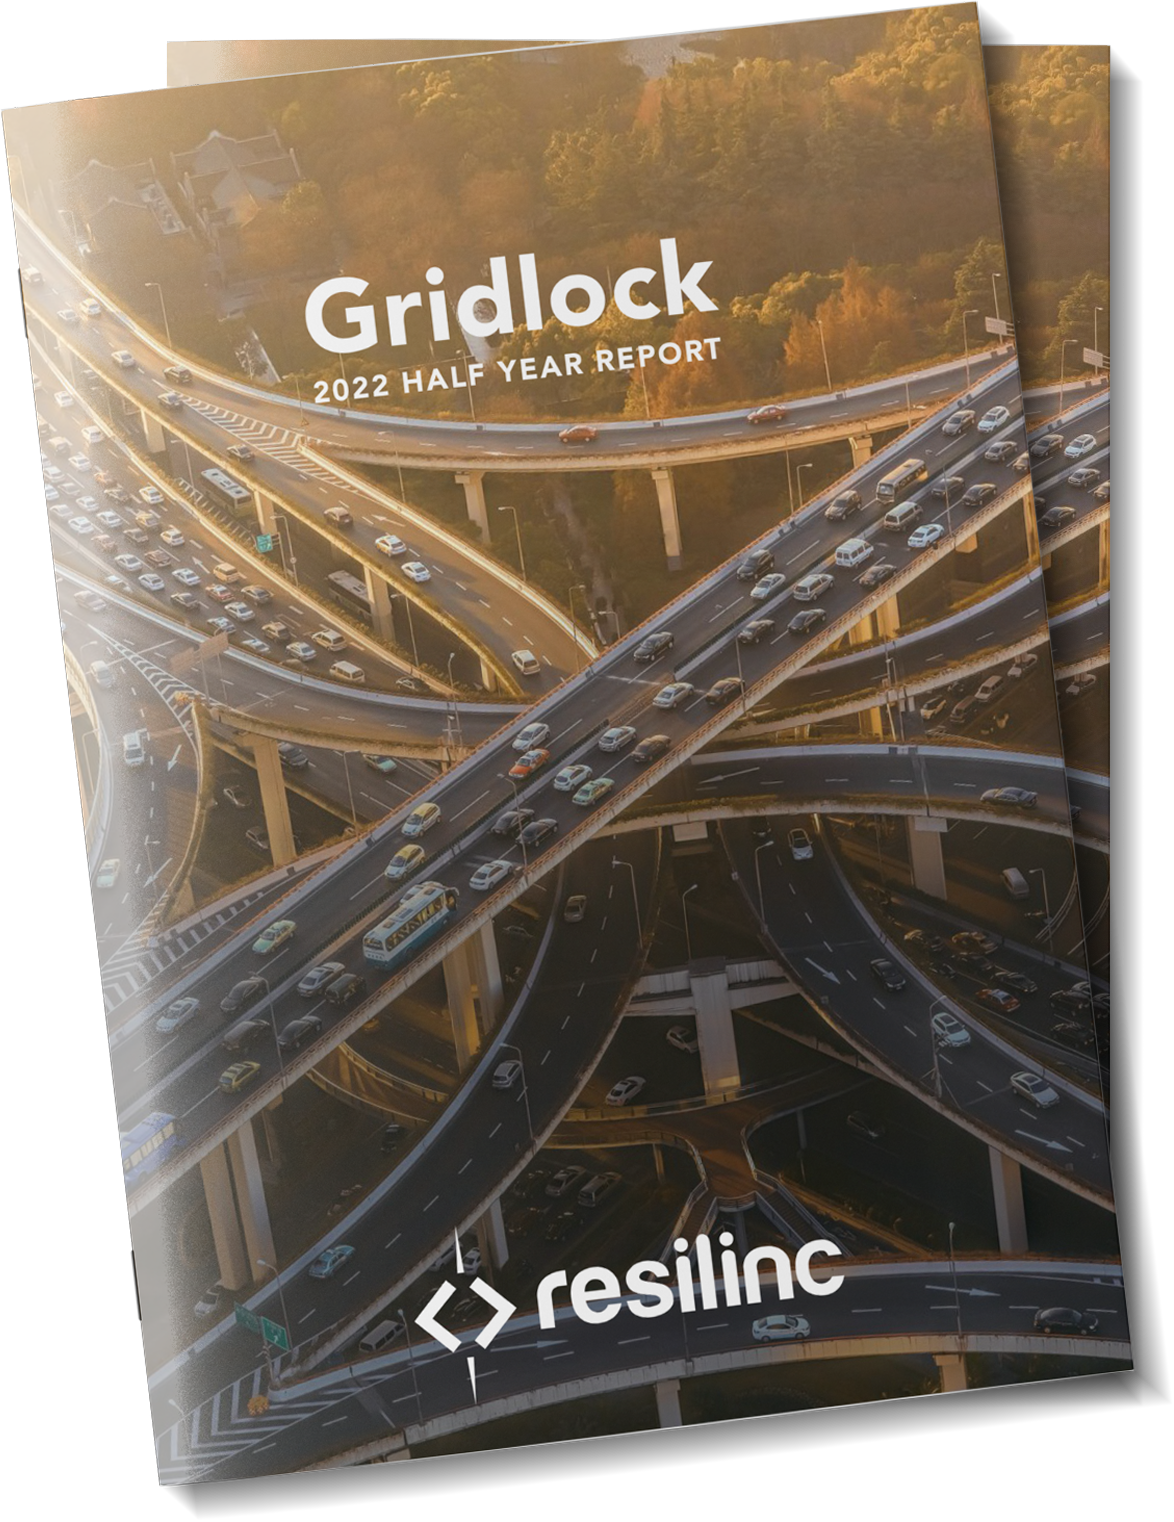 Gridlock - Resilinc 2022 Half Year Report